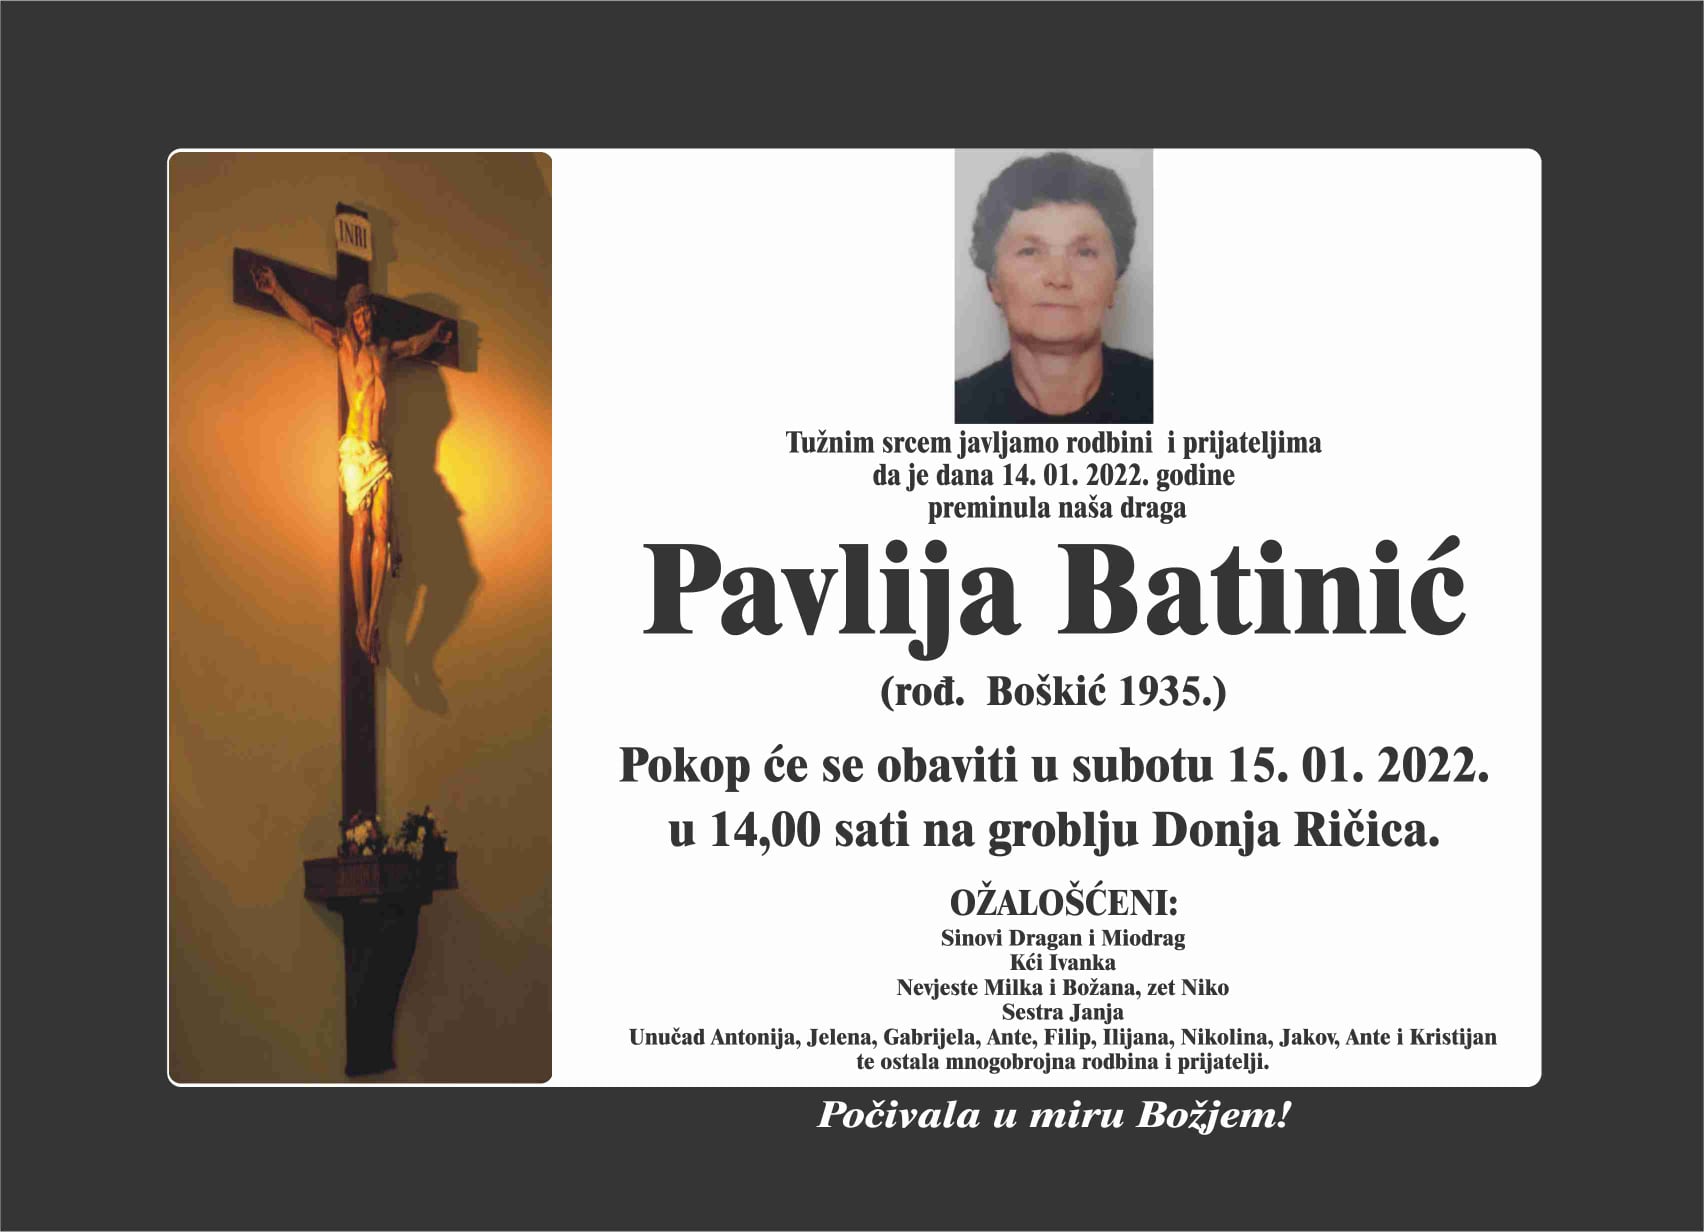 Pavlija Batinic